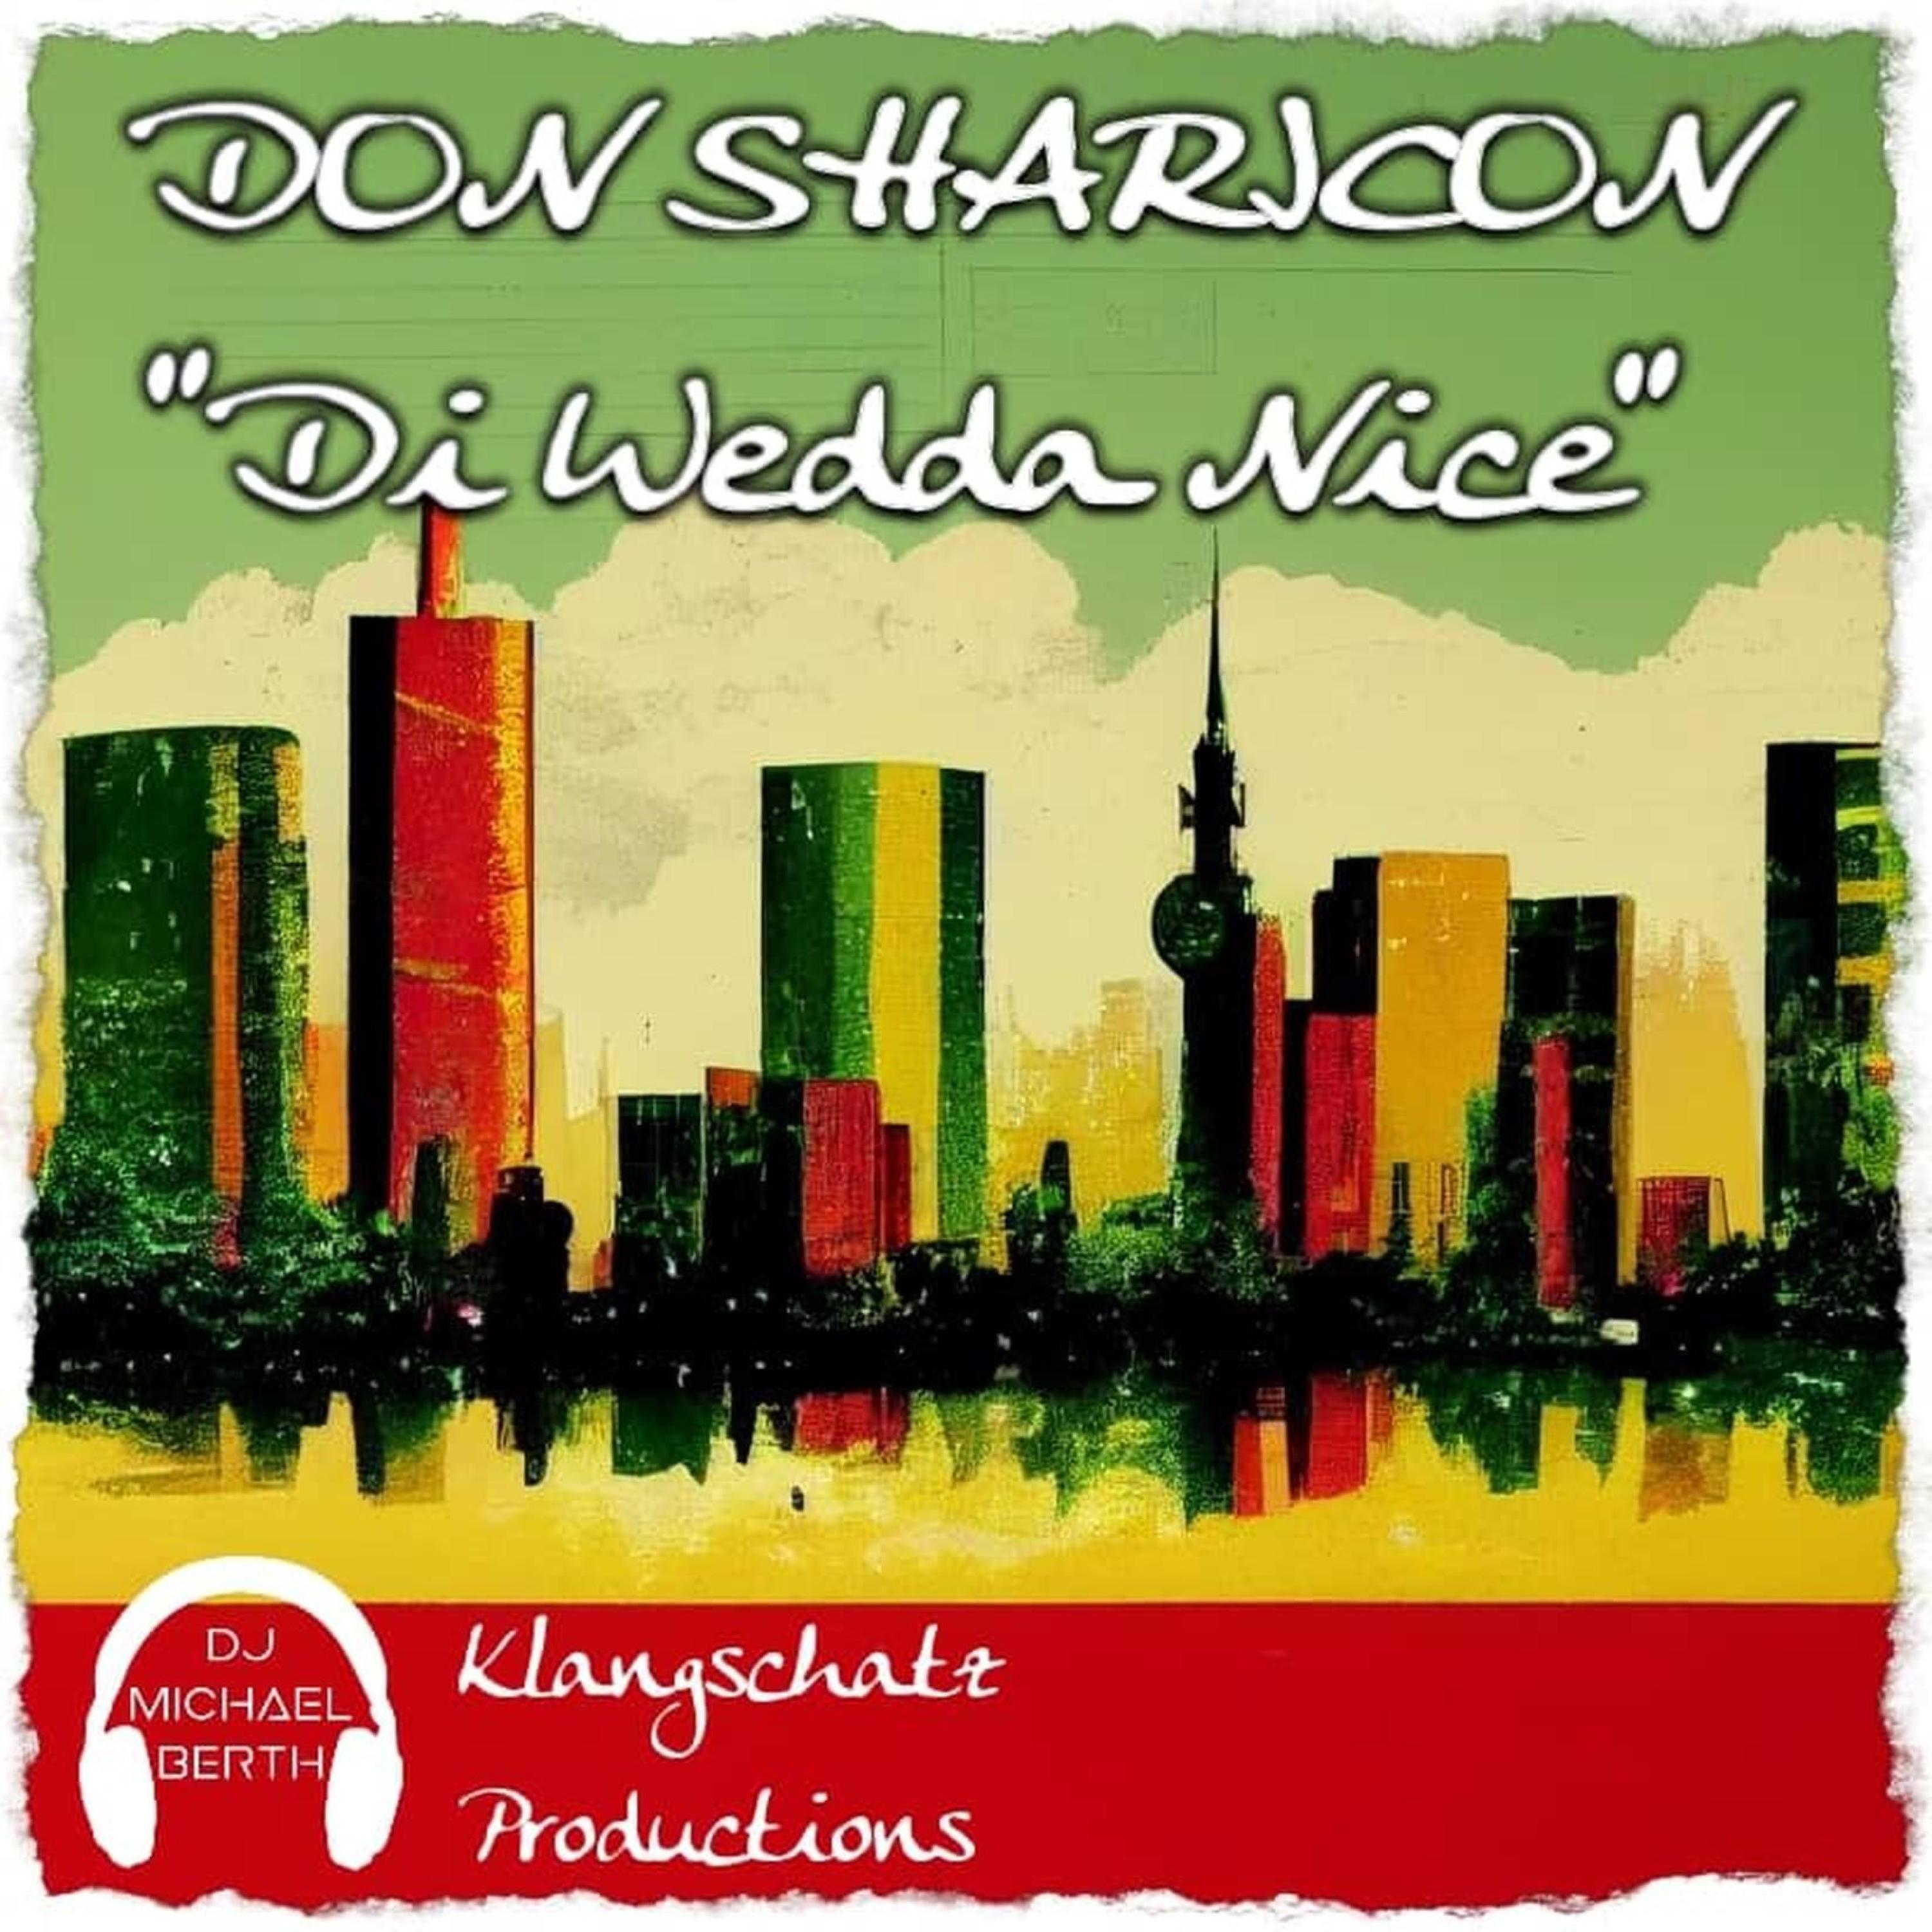 DJ Michael Berth - Di Wedda Nice (feat. Don Sharicon)